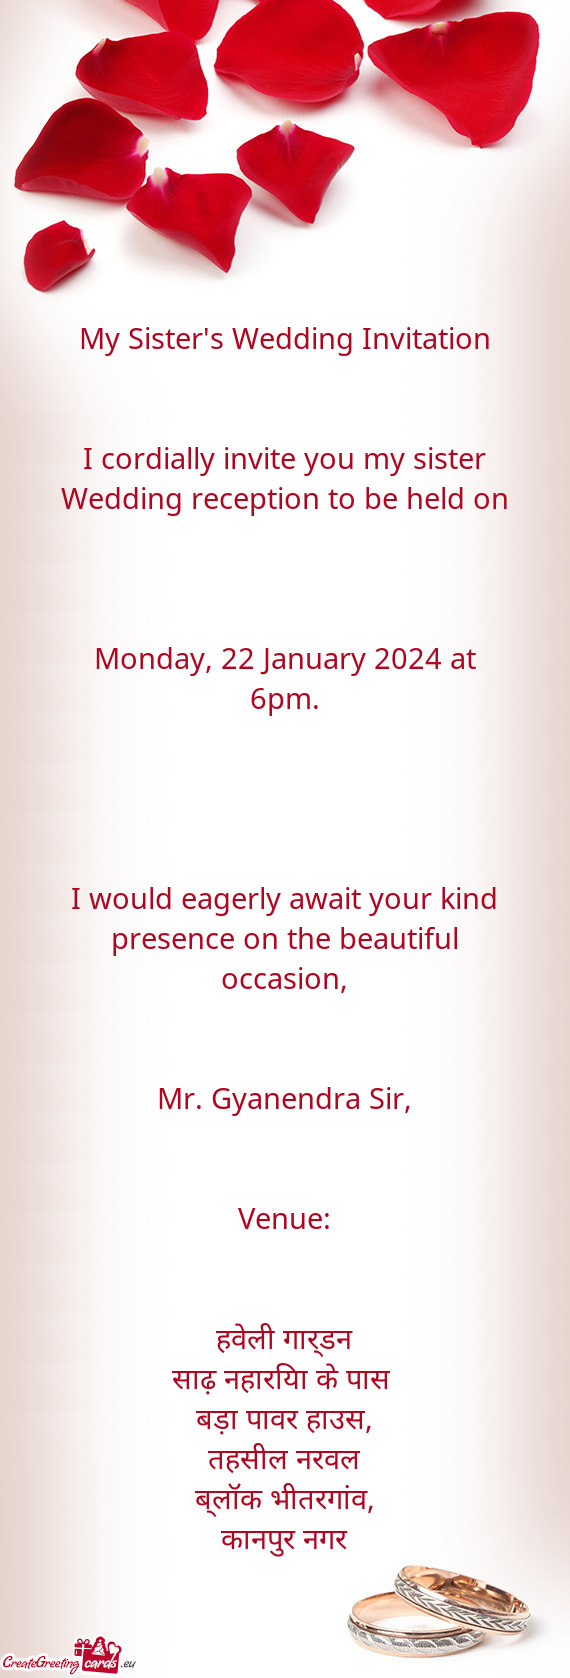 Mr. Gyanendra Sir